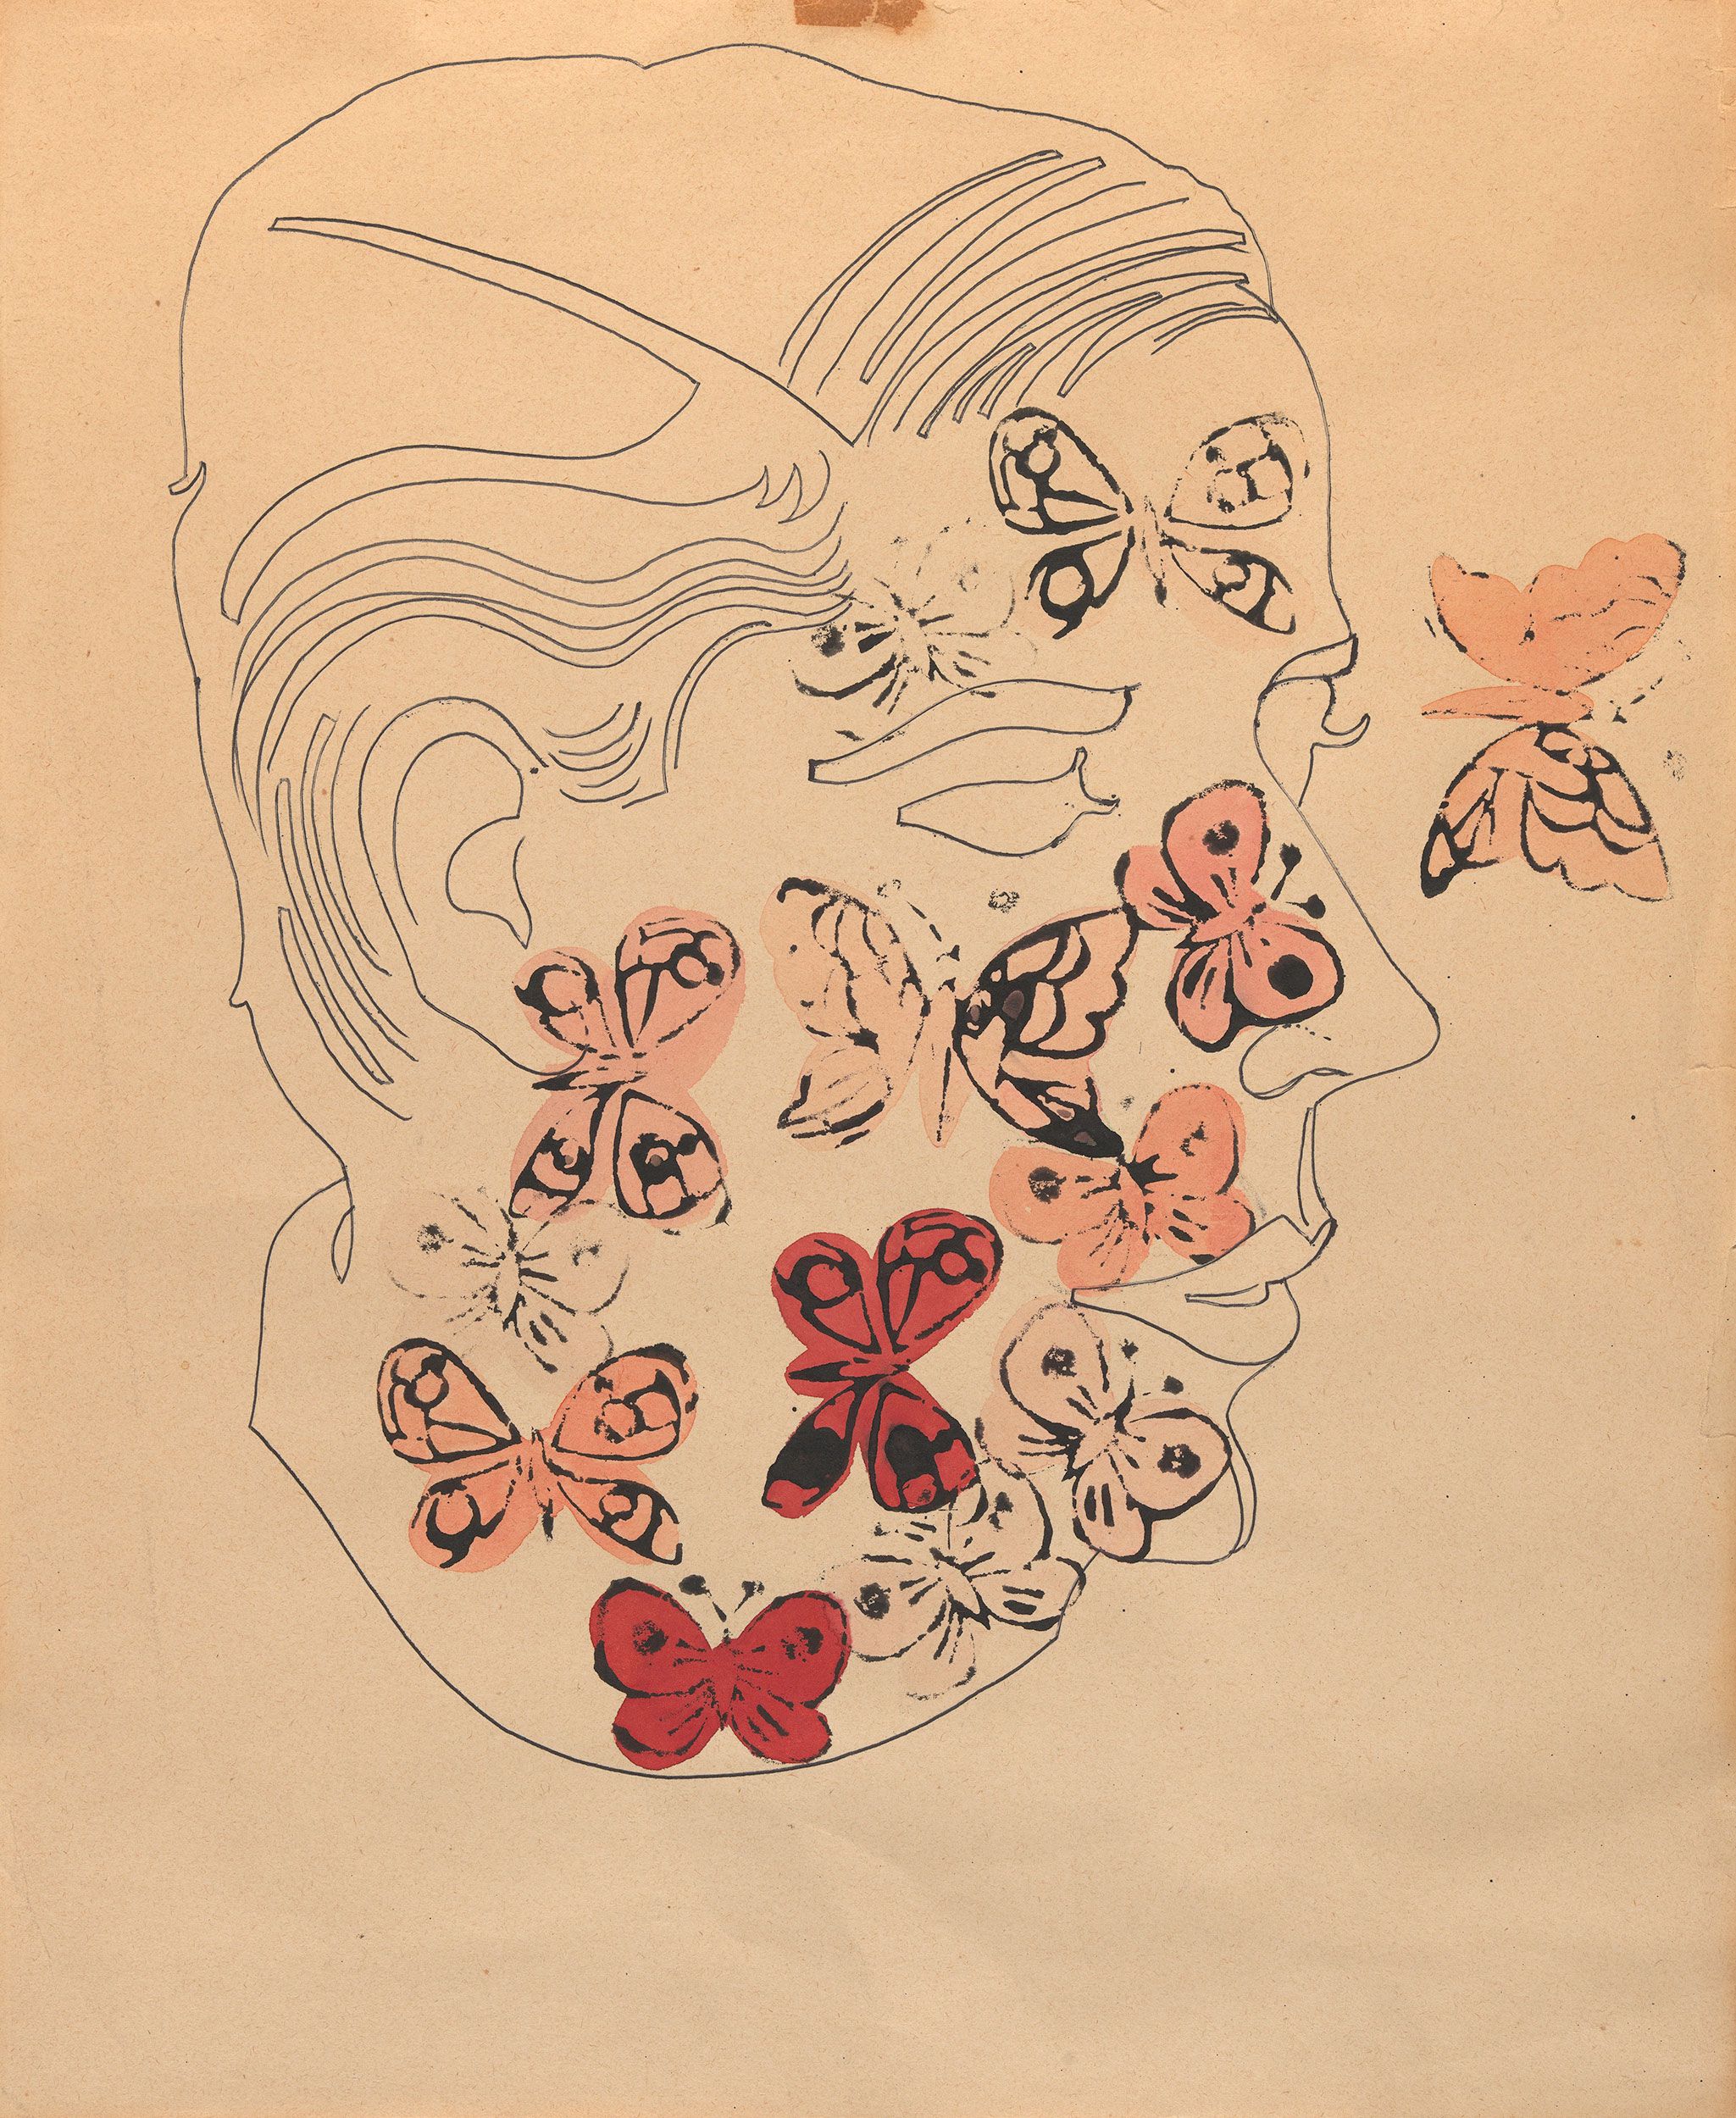 Art Intertwine: Art News - Andy Warhol Drawings Rediscovered